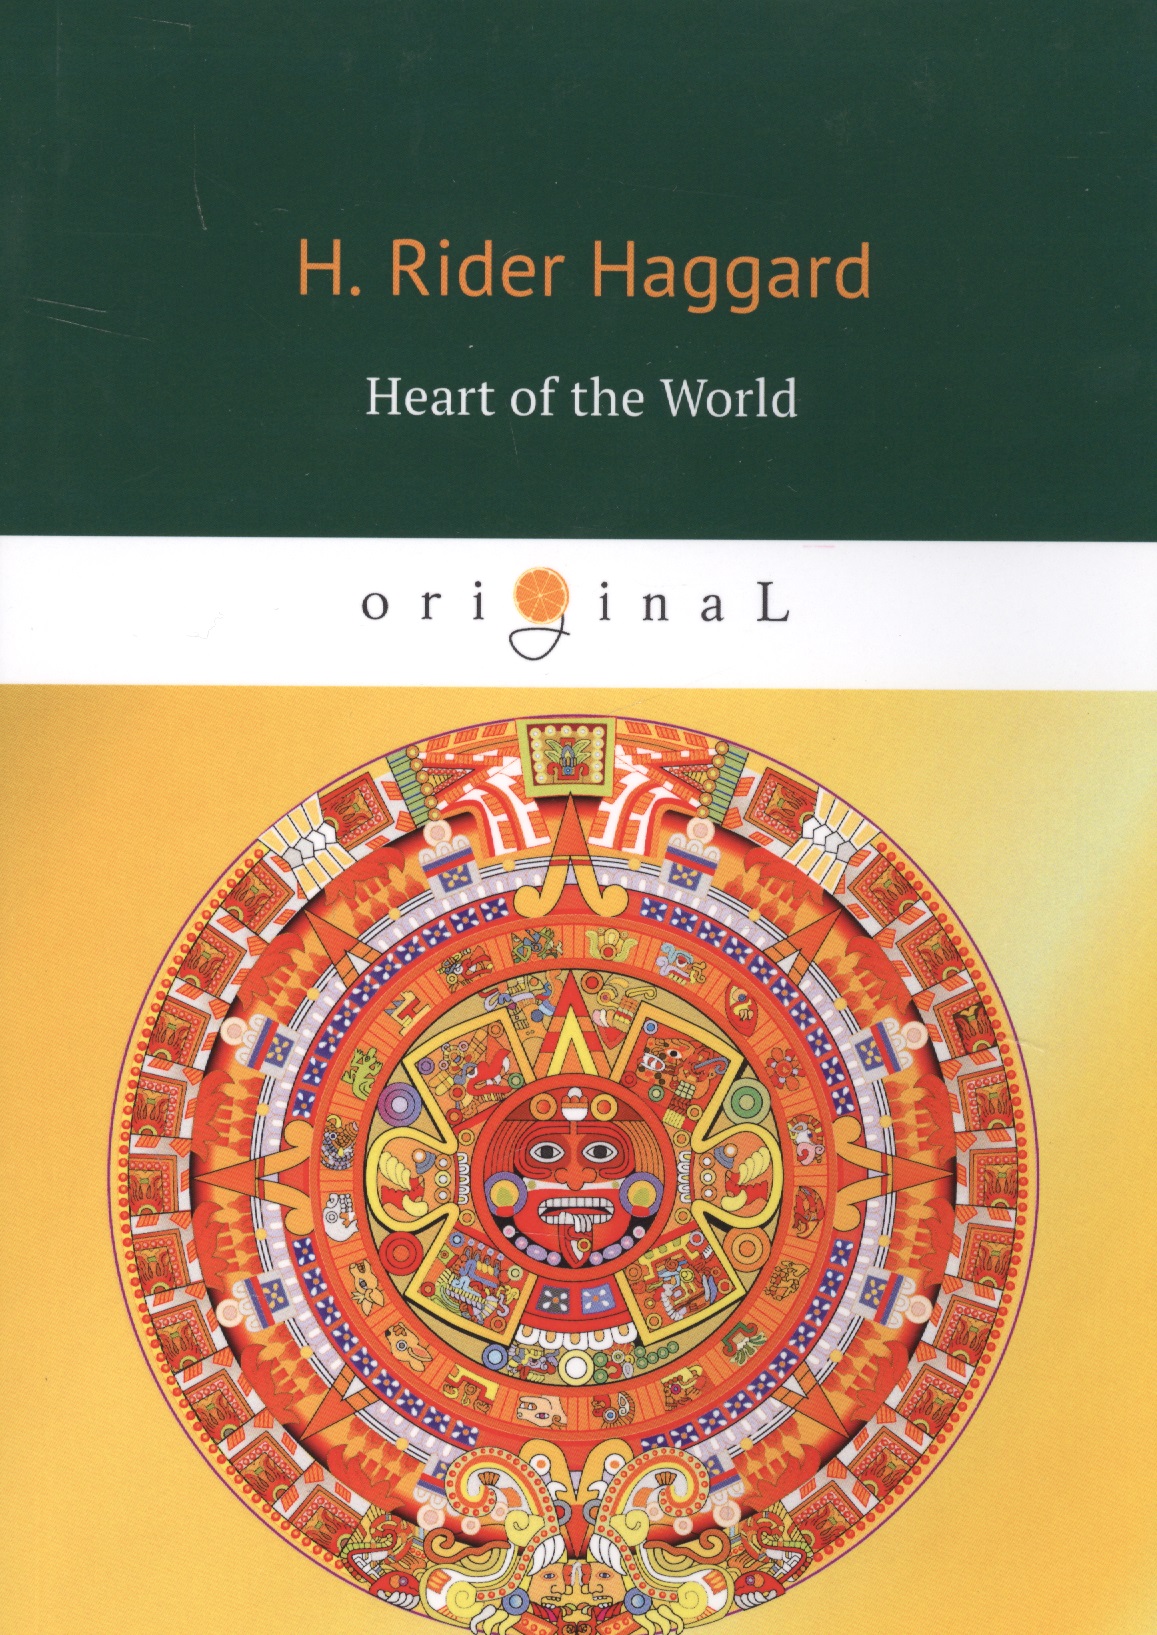 Хаггард Генри Райдер Heart of the World = Сердце мира: на английском языке хаггард генри райдер heart of the world сердце мира на англ яз